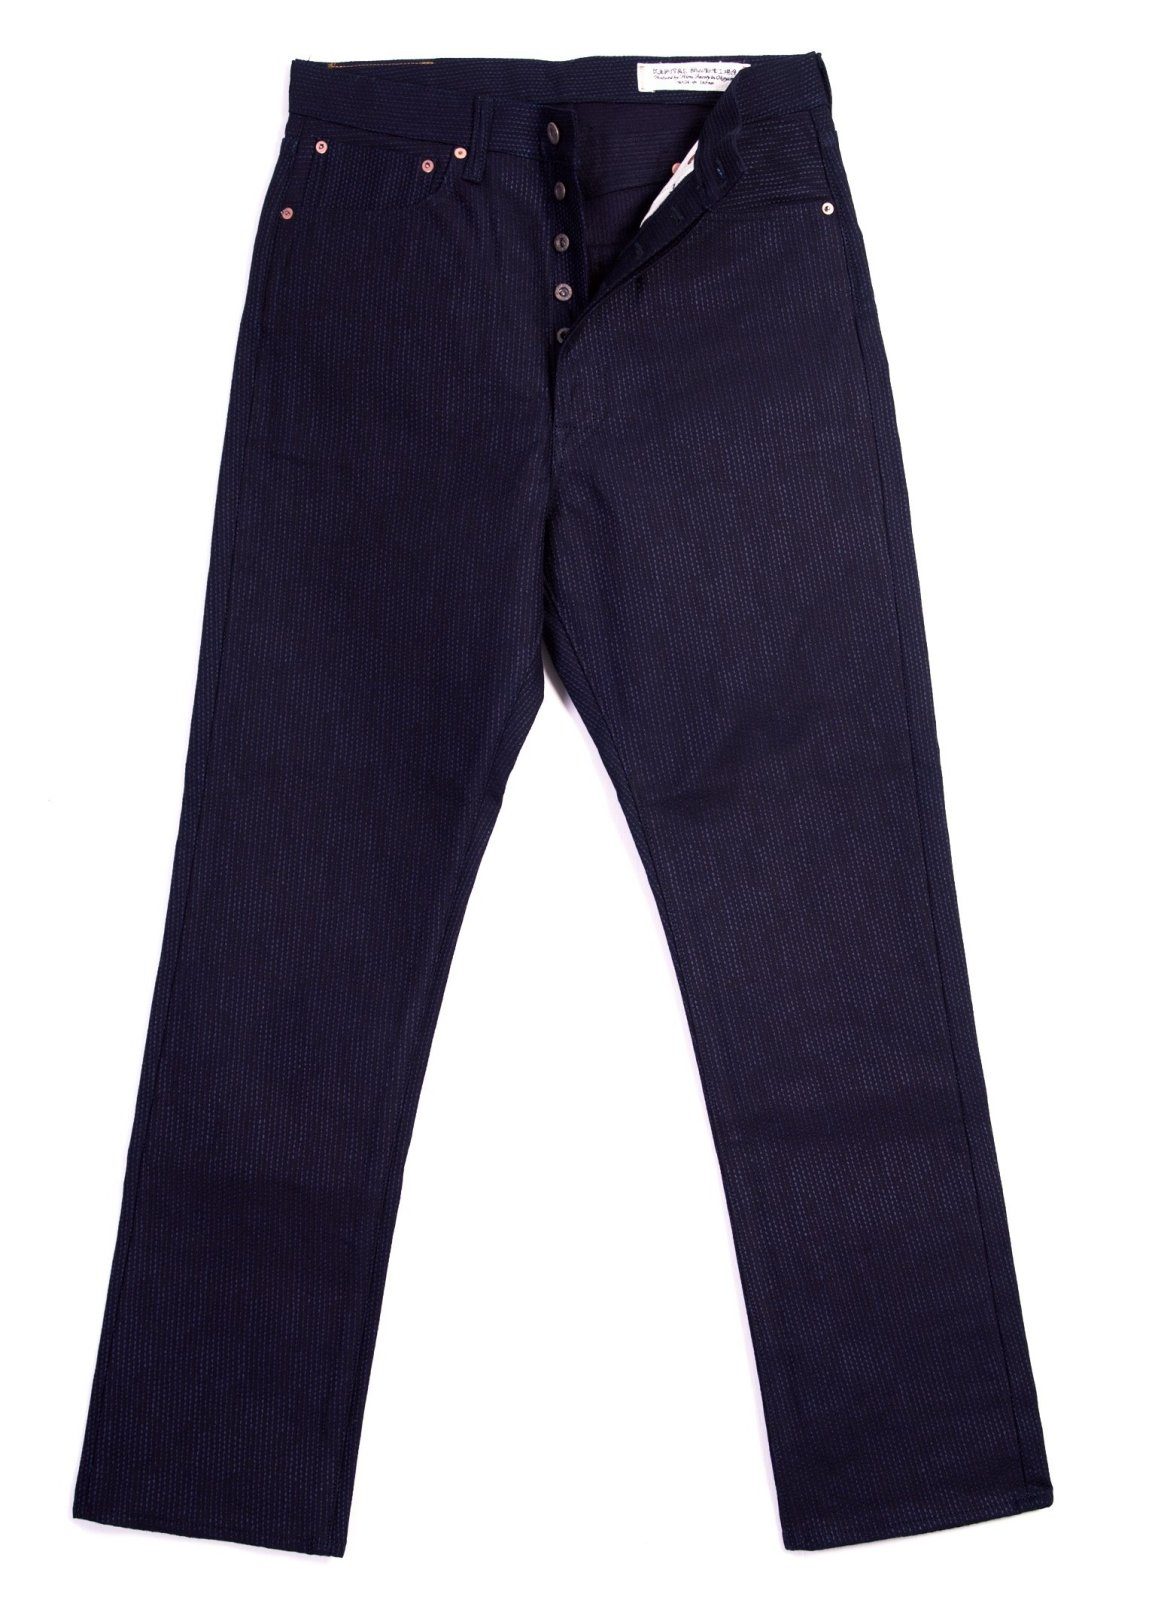 CENTURY DENIM 5P OKAGILLY | Sashiko Jeans | Indigo | €595 -Kapital- HANSEN Garments